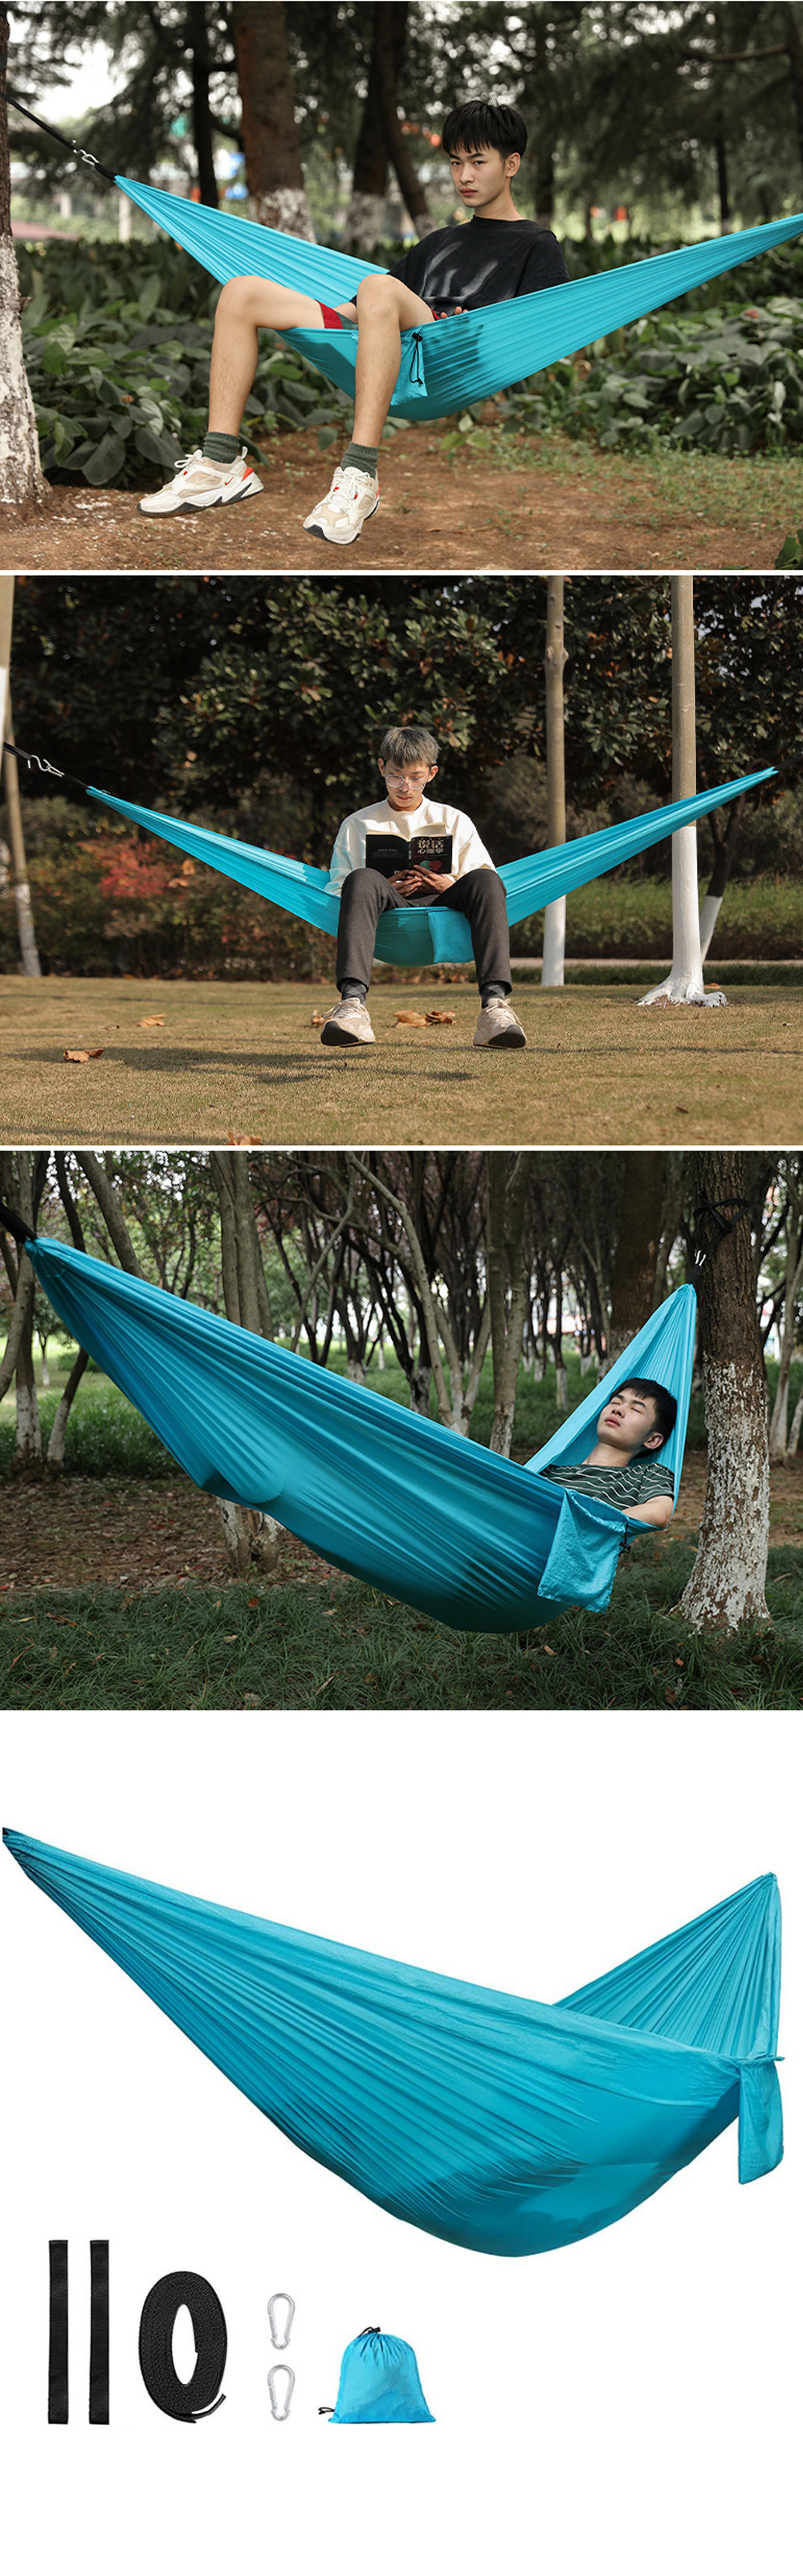 Portable-Nylon-Hammock-Lightweight-Outdoor-Camping-Garden-Swing-Hanging-Chair-Max-Load-200KG-1861073-2